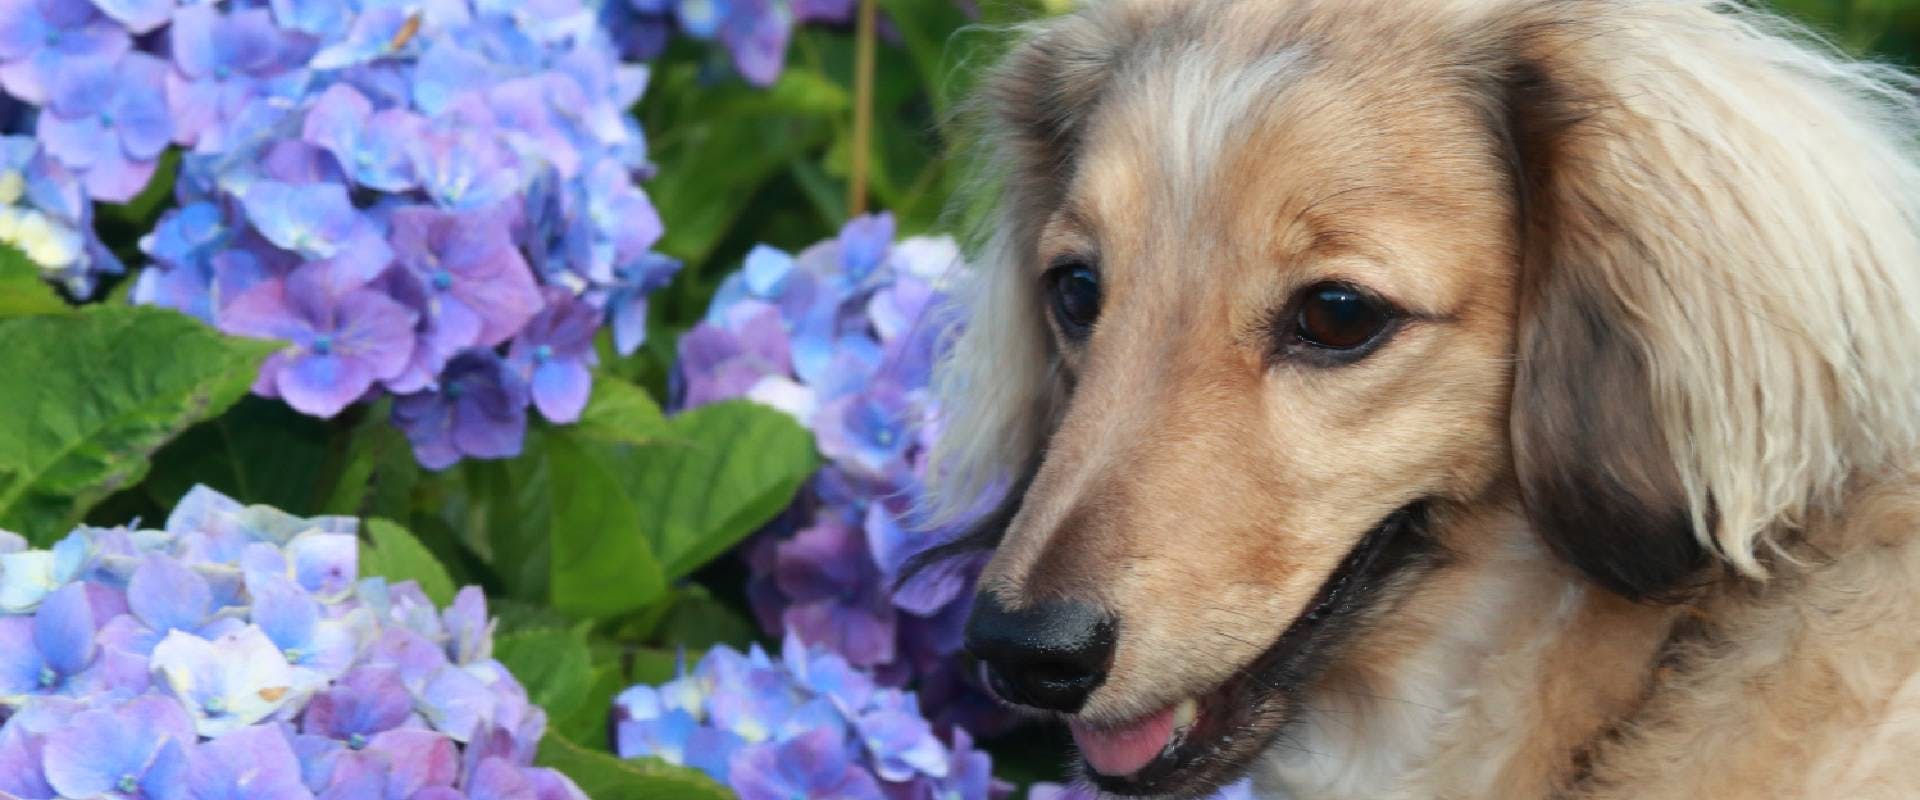 Dog sitting in front of a purple hydrangea shrub